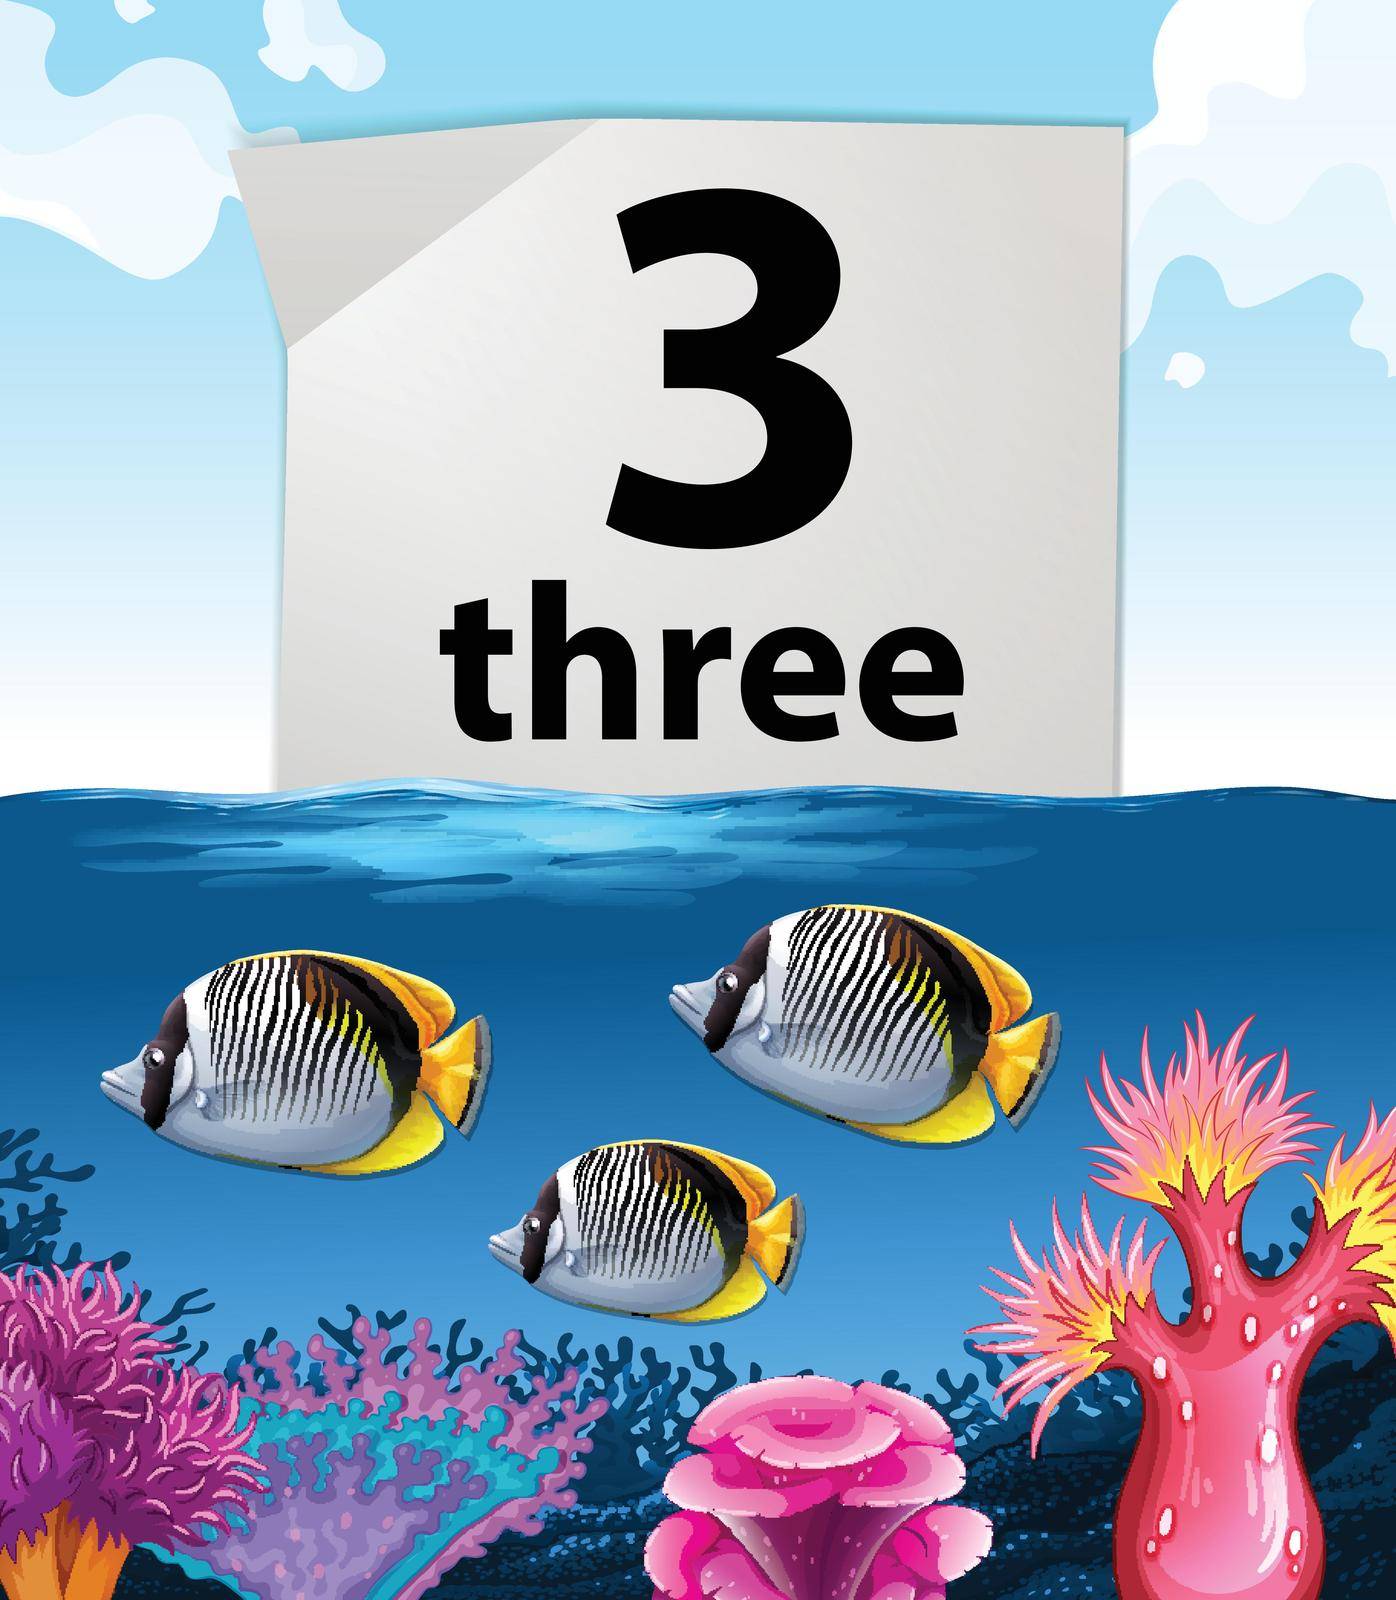 Number three and three fish underwater illustration